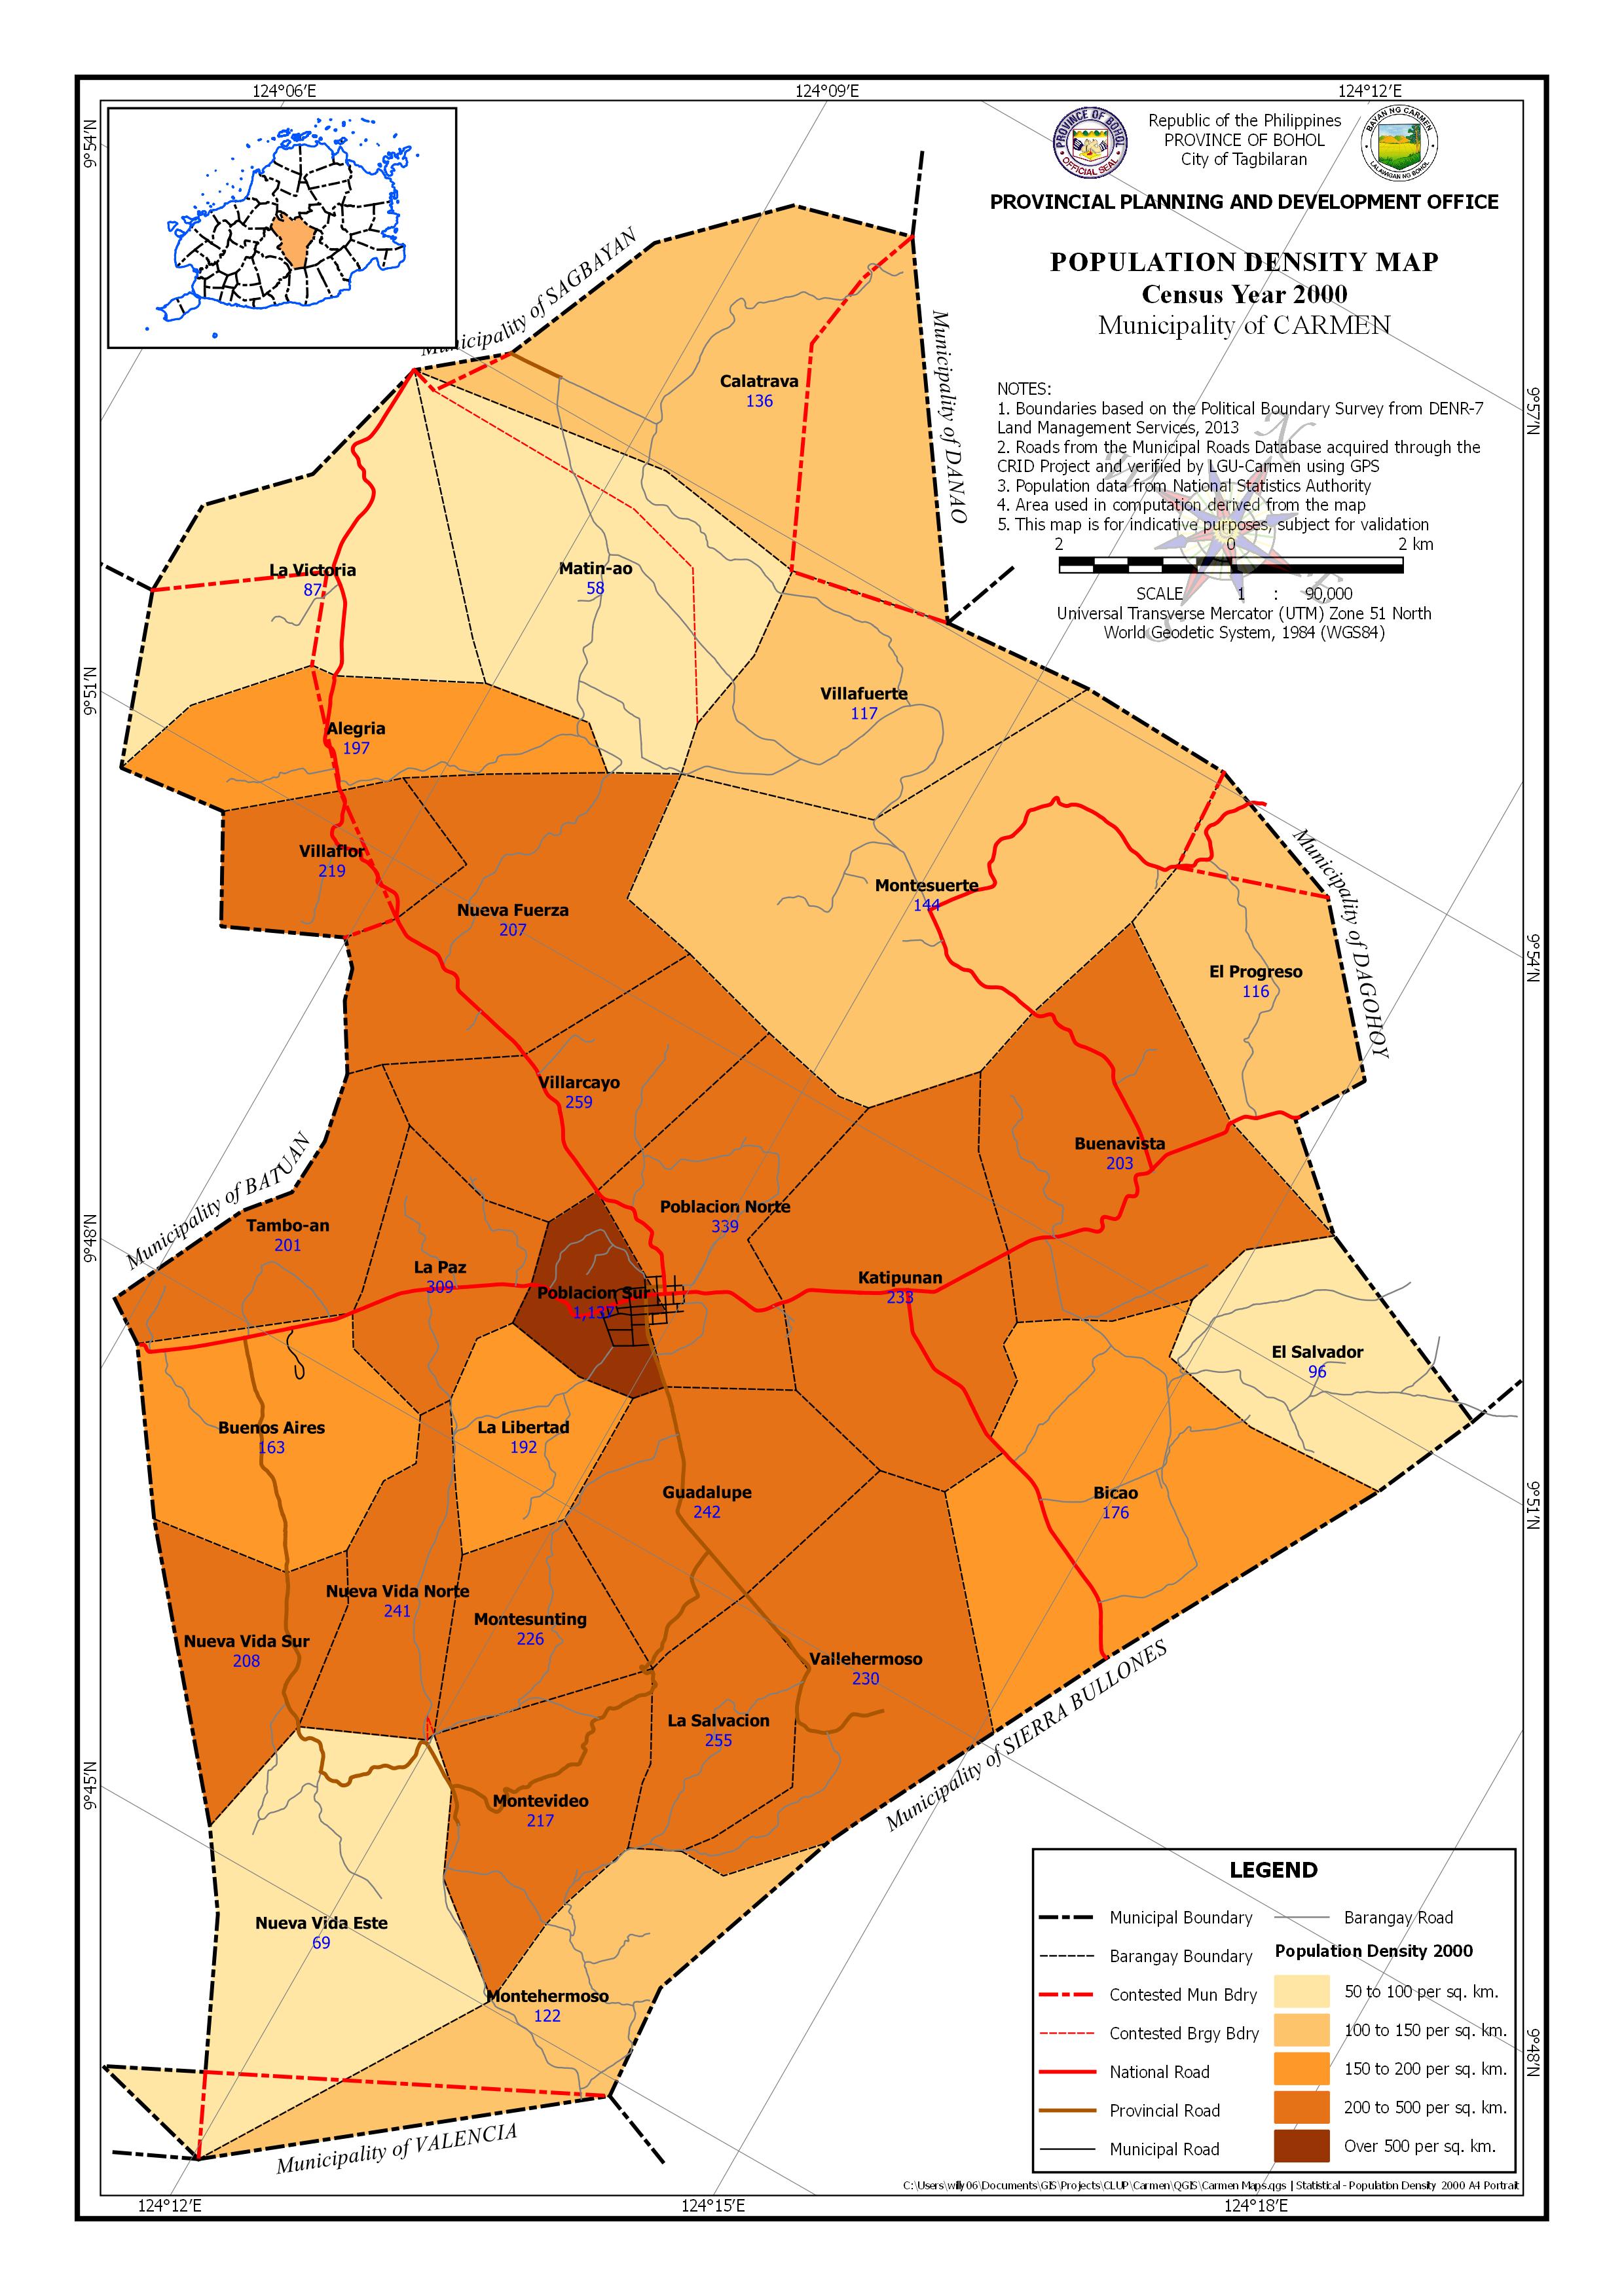 Population Density Census Year: 2000